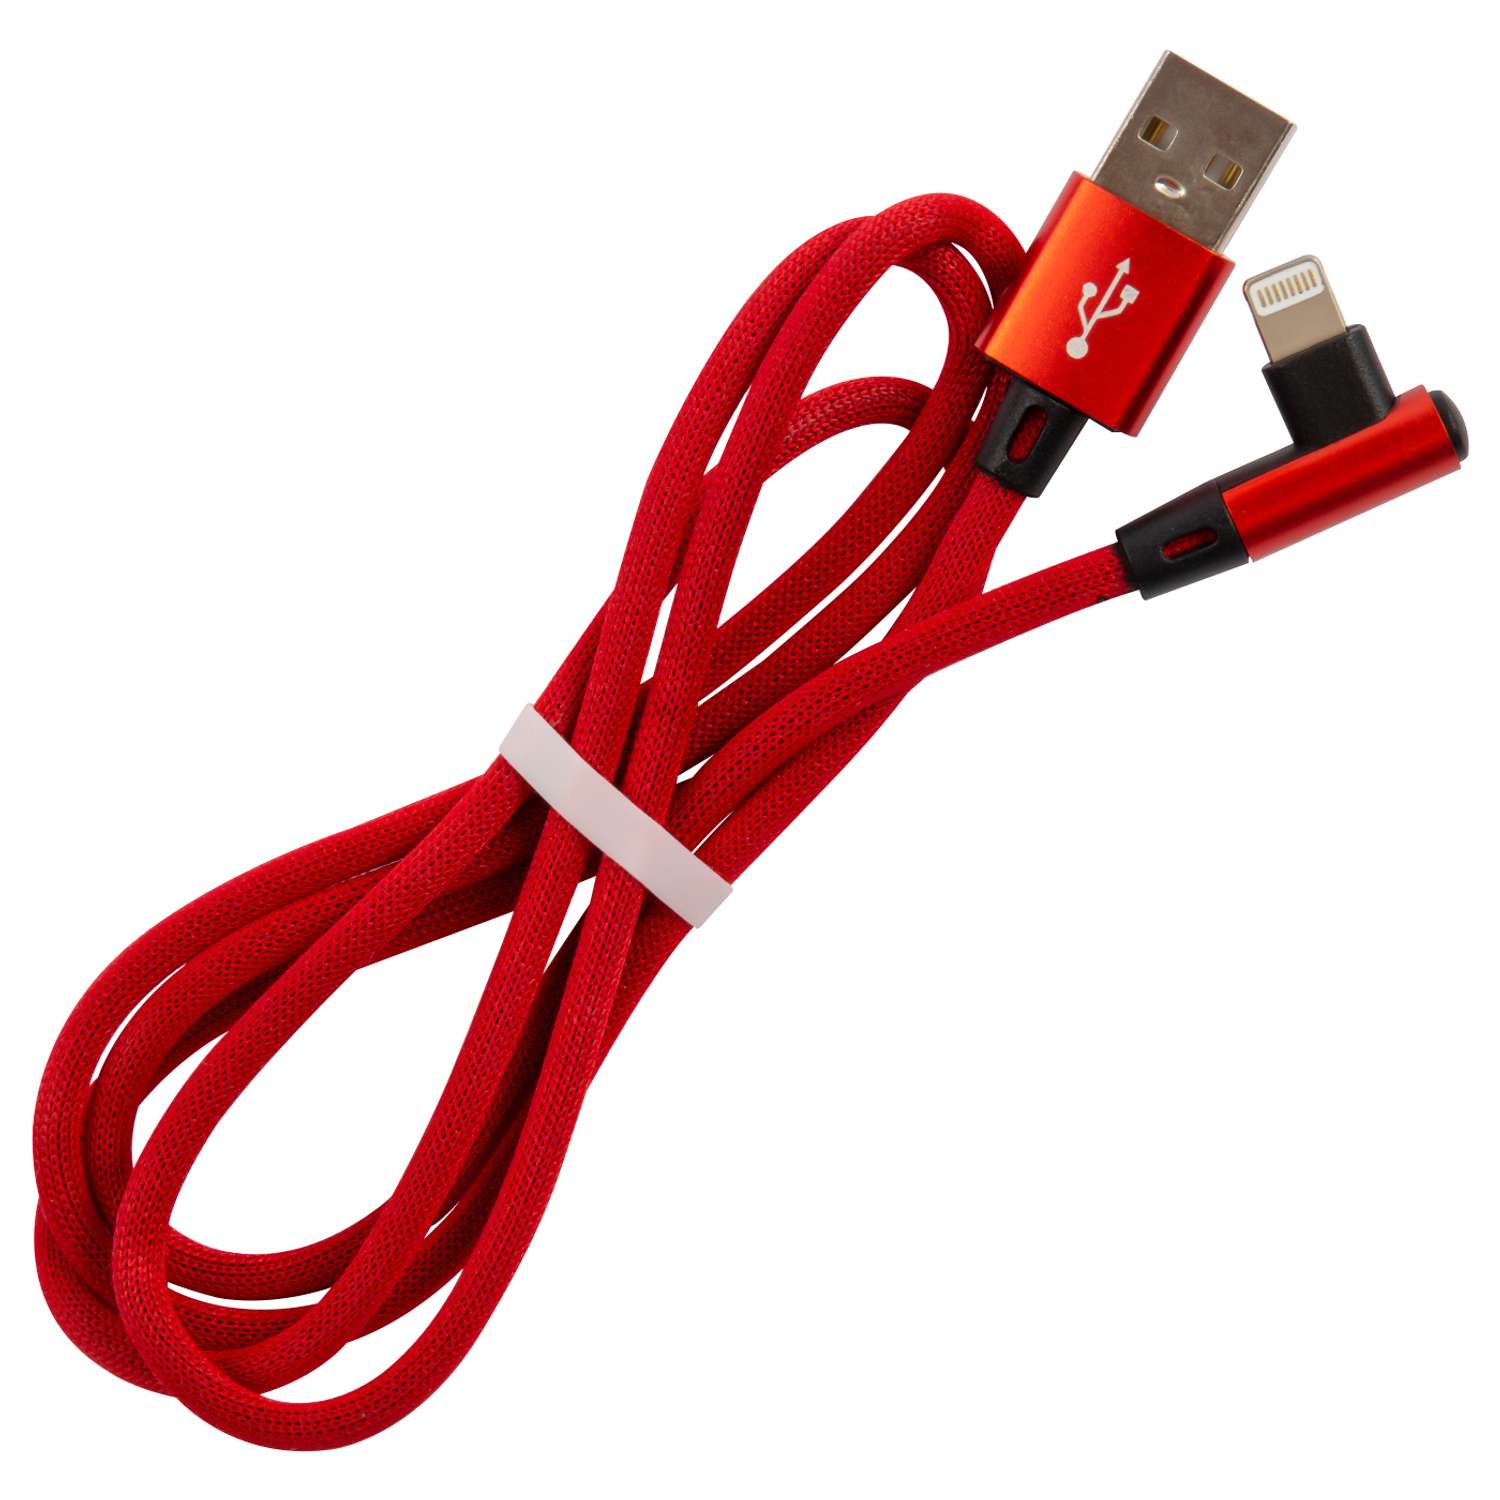 Дата кабель Red line. Сетевой кабель Red line t3 ут000035522 упаковка. Smartfon Kompa krasni. Redline кабель USB 8 Pin PVX фото. Кабель red line